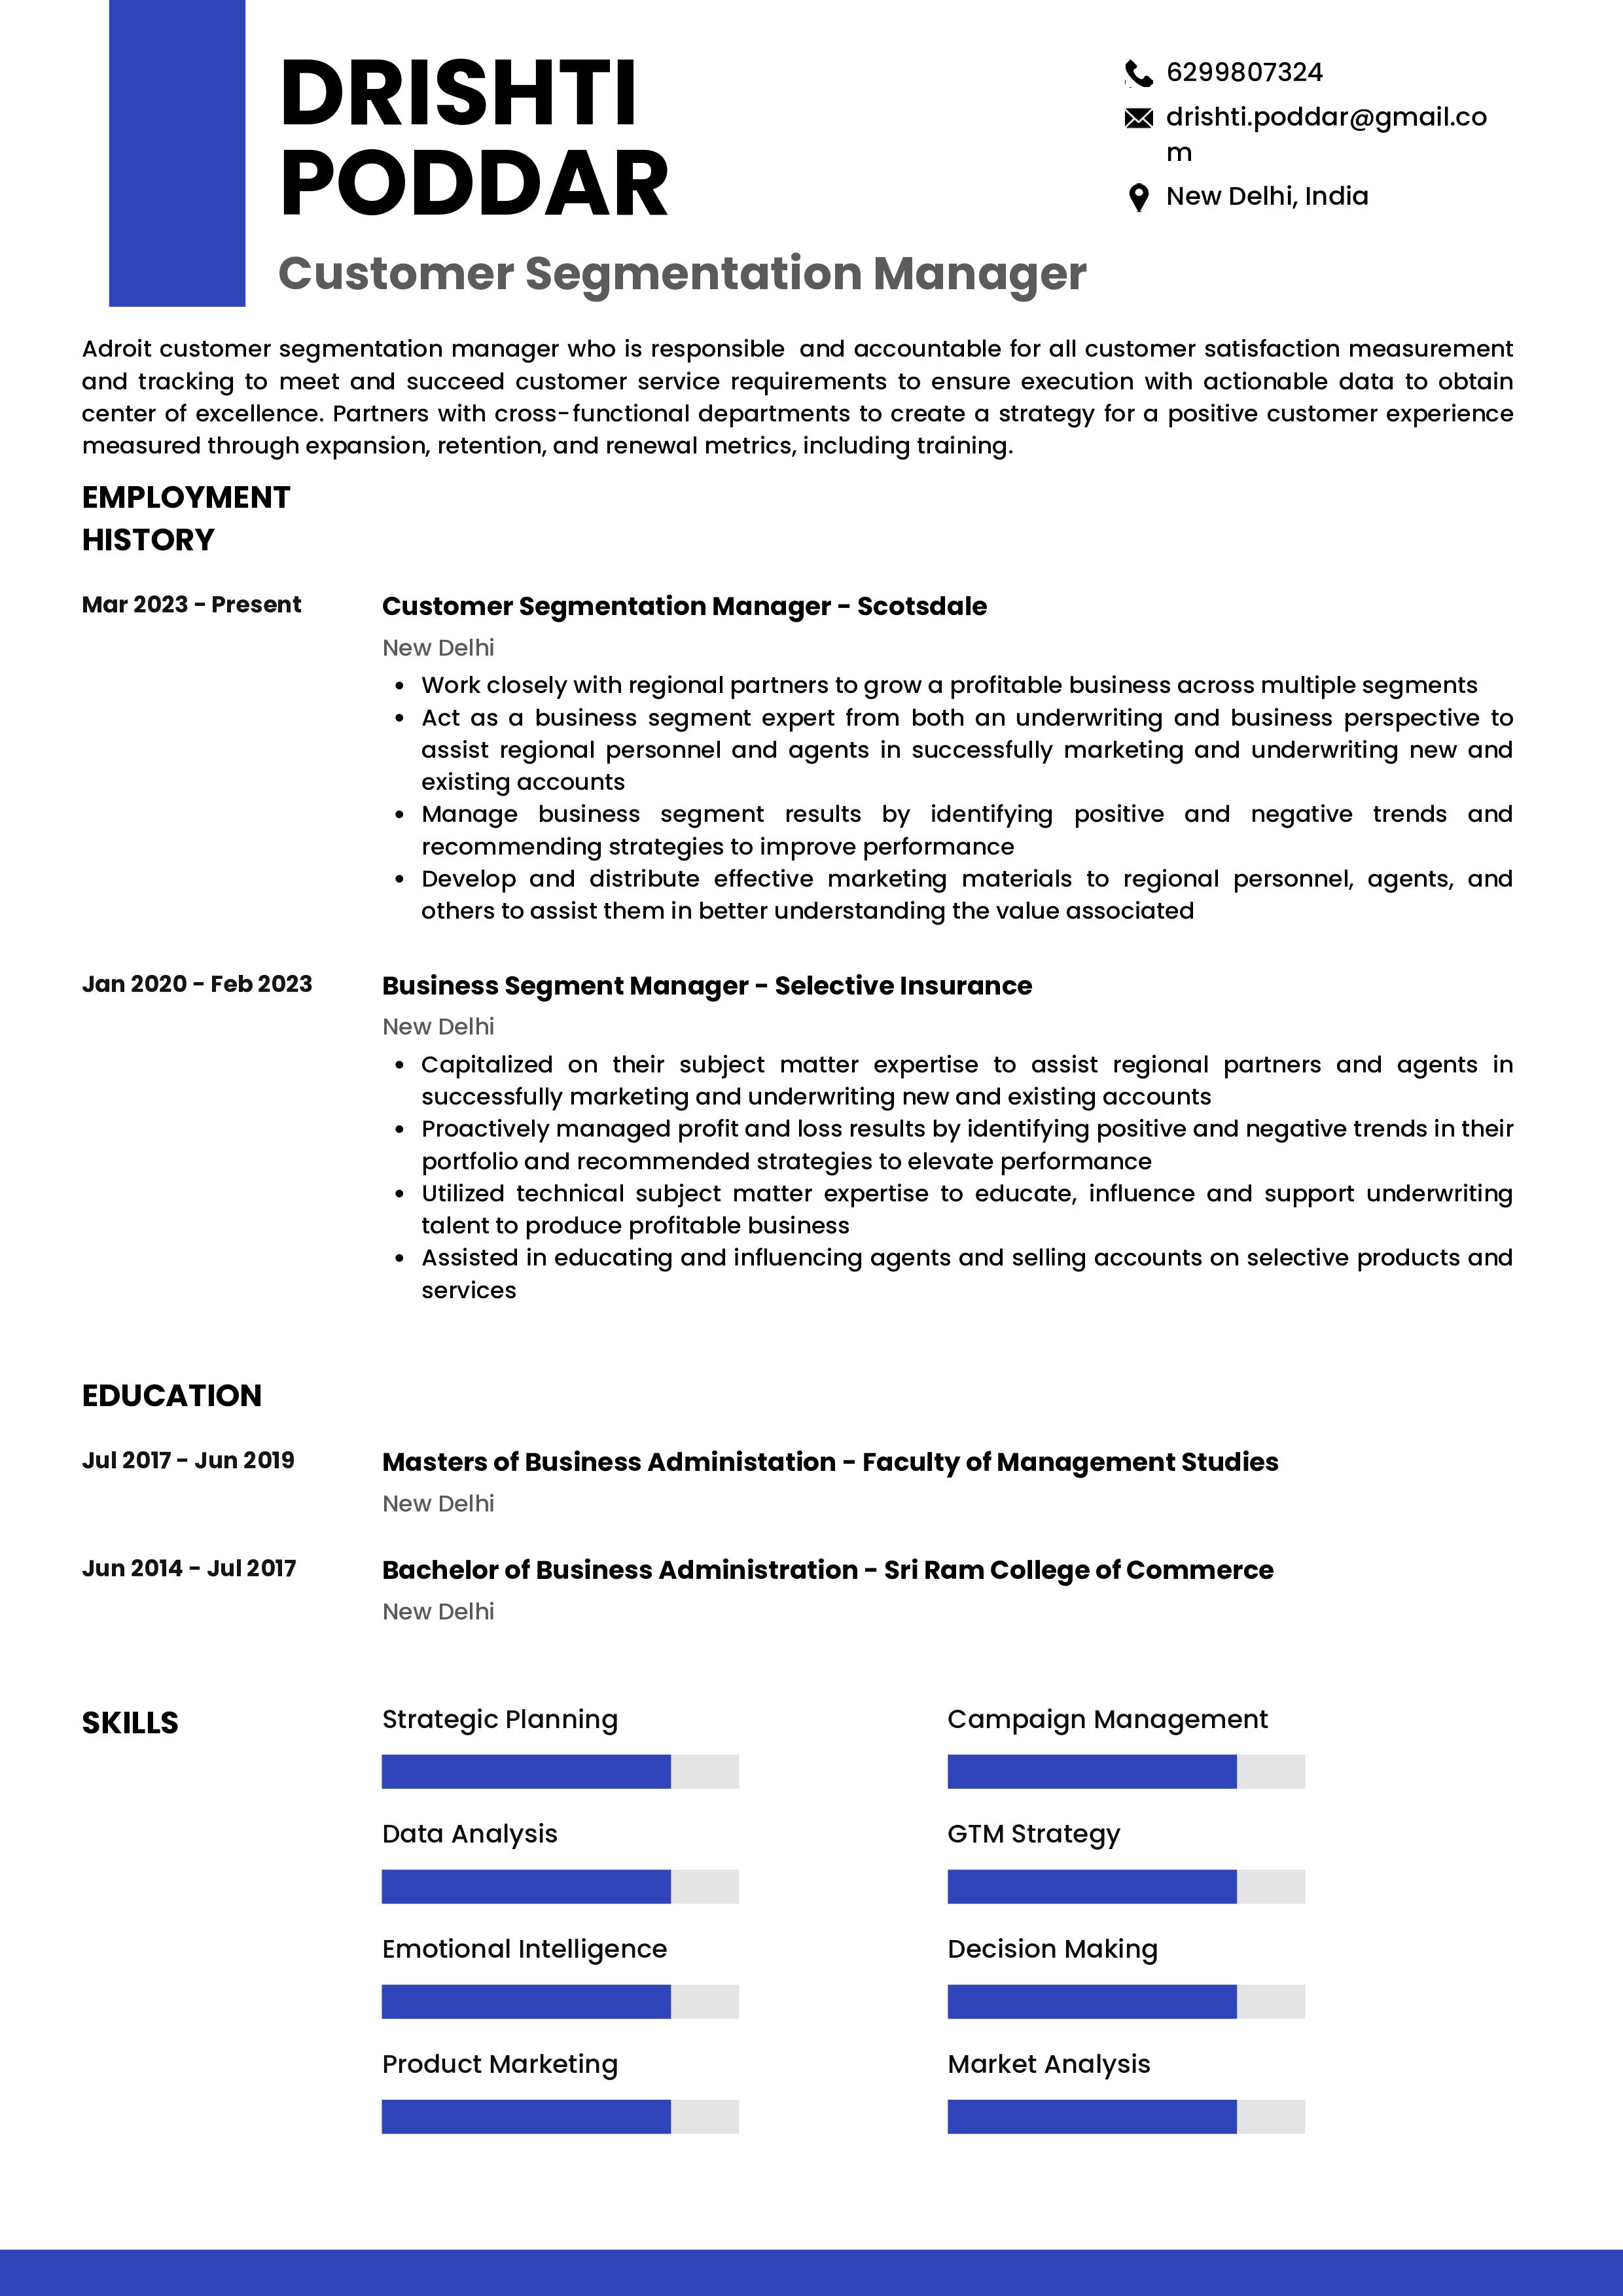 Resume of Customer Segmentation Manager